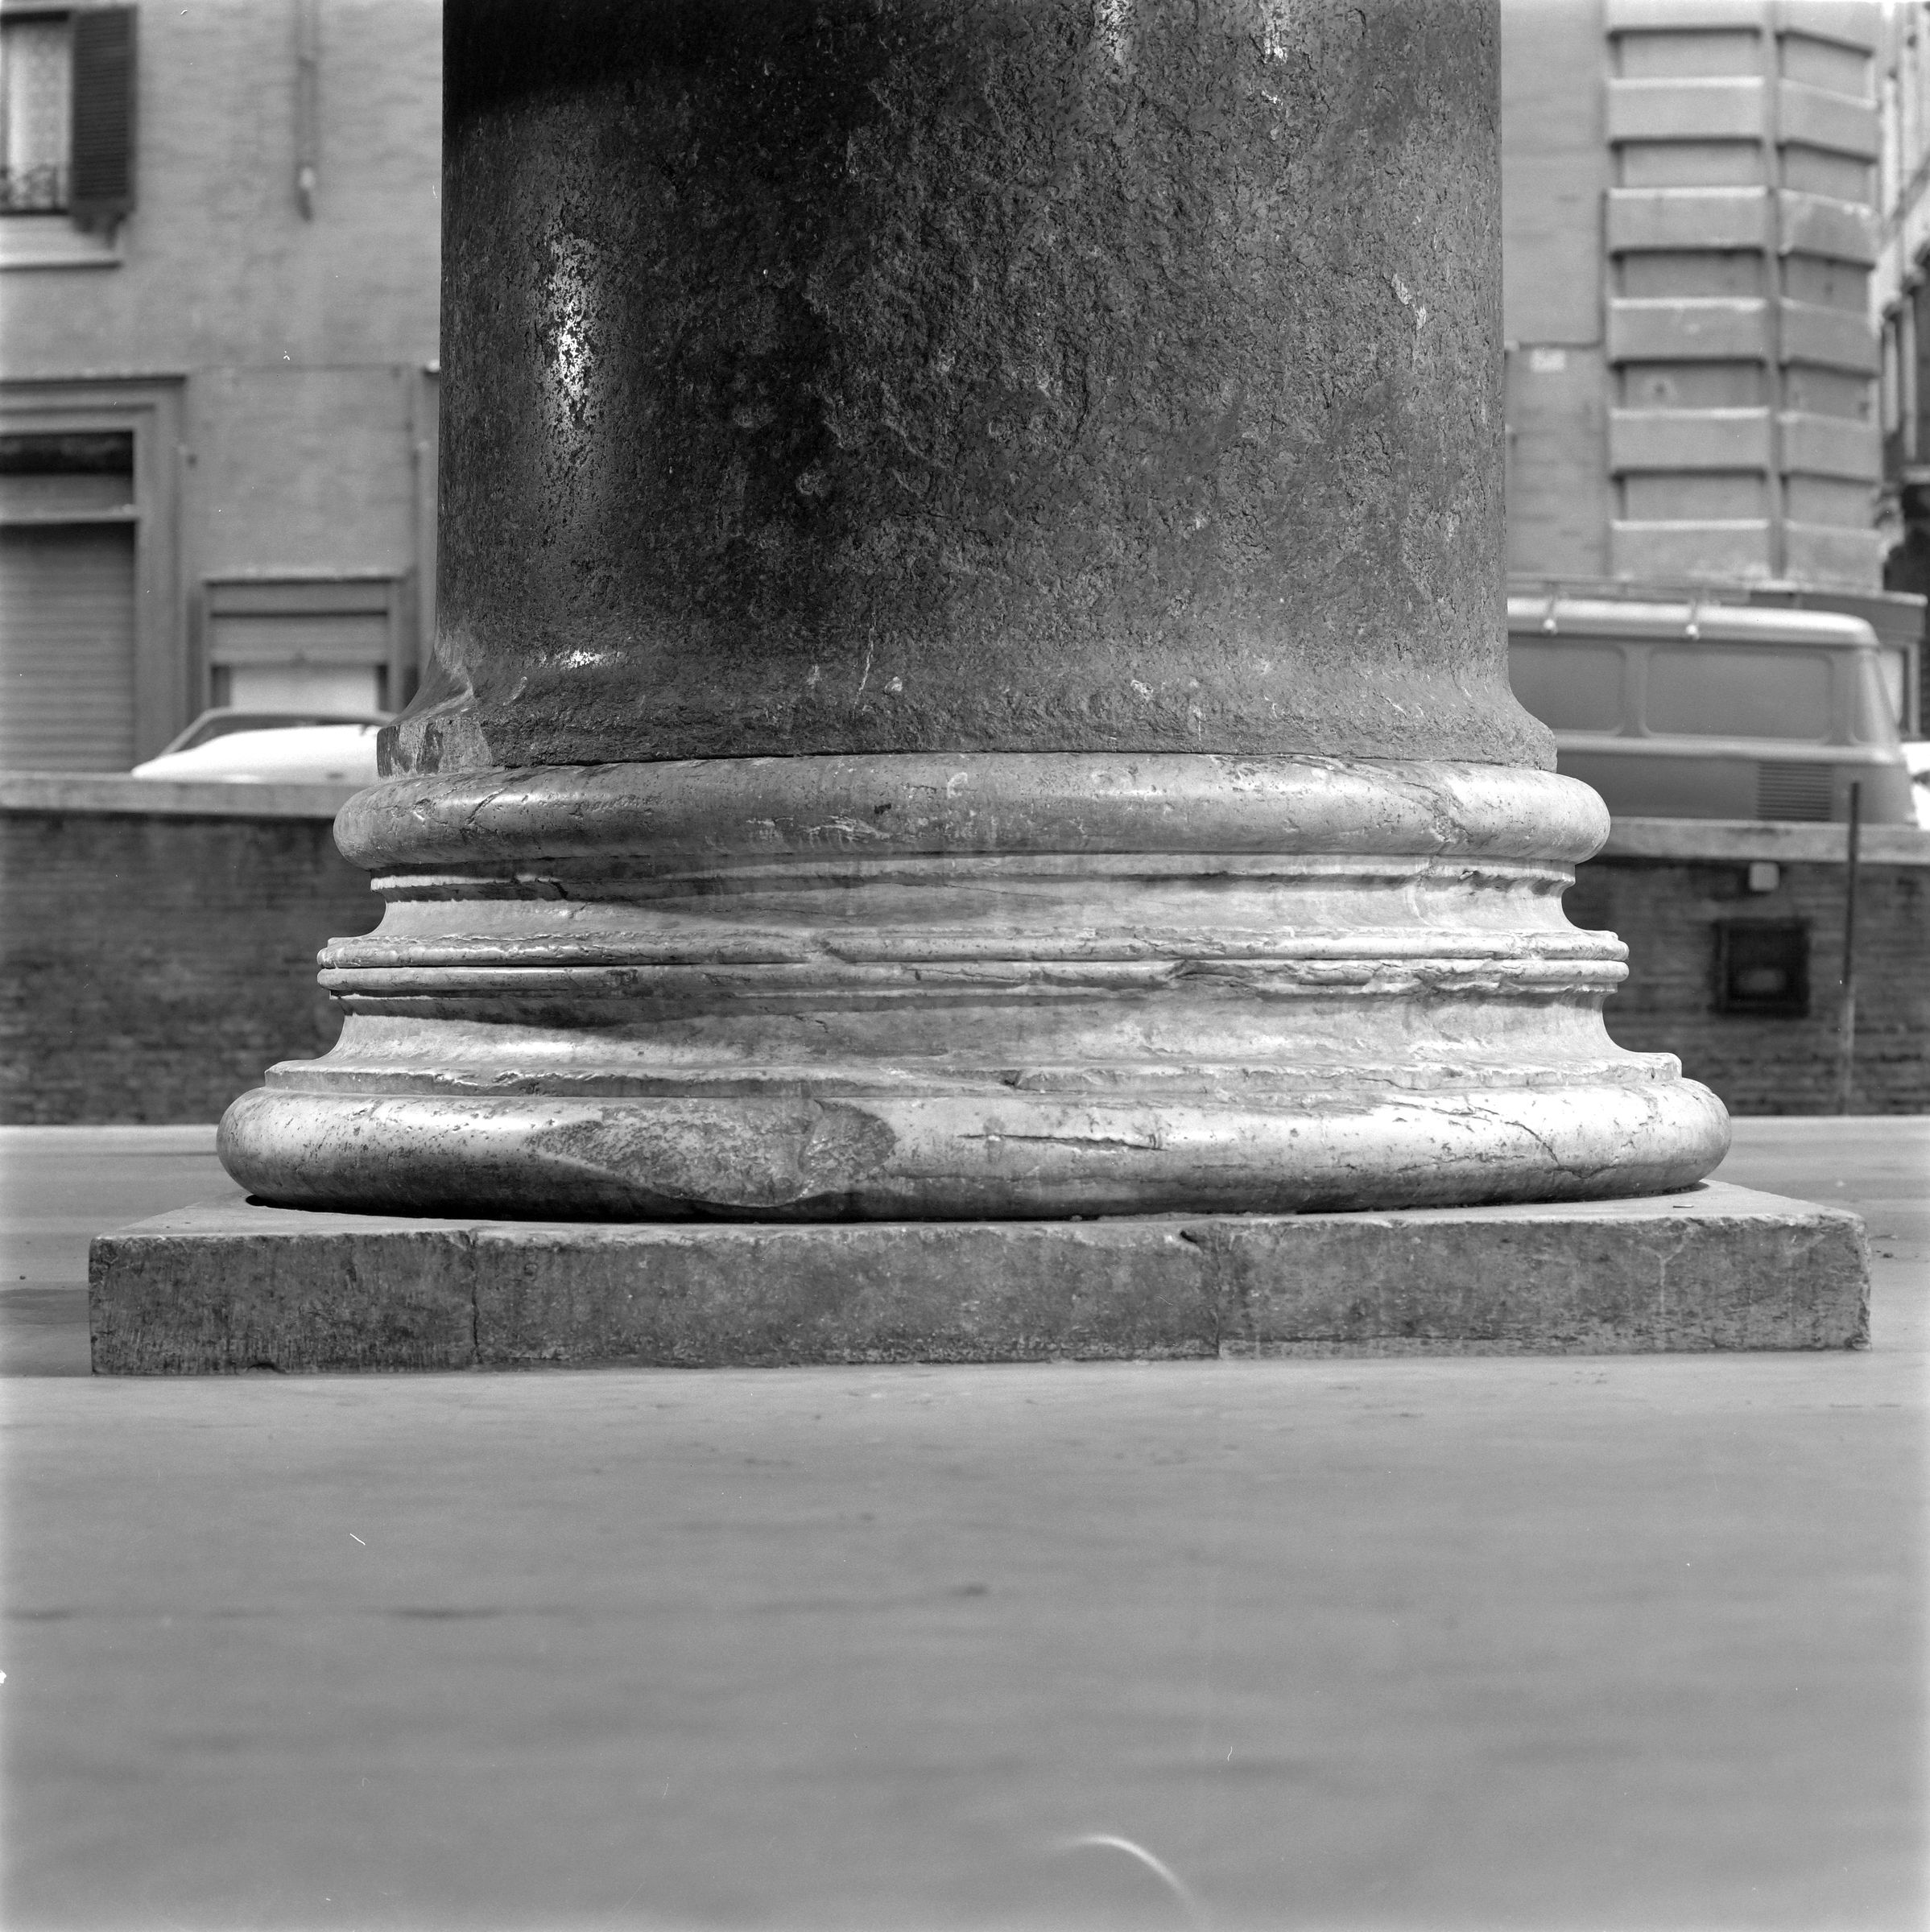 Fotografo non identificato, Pantheon,1951-2000, gelatina ai sali d'argento, 6x6 cm, N077963